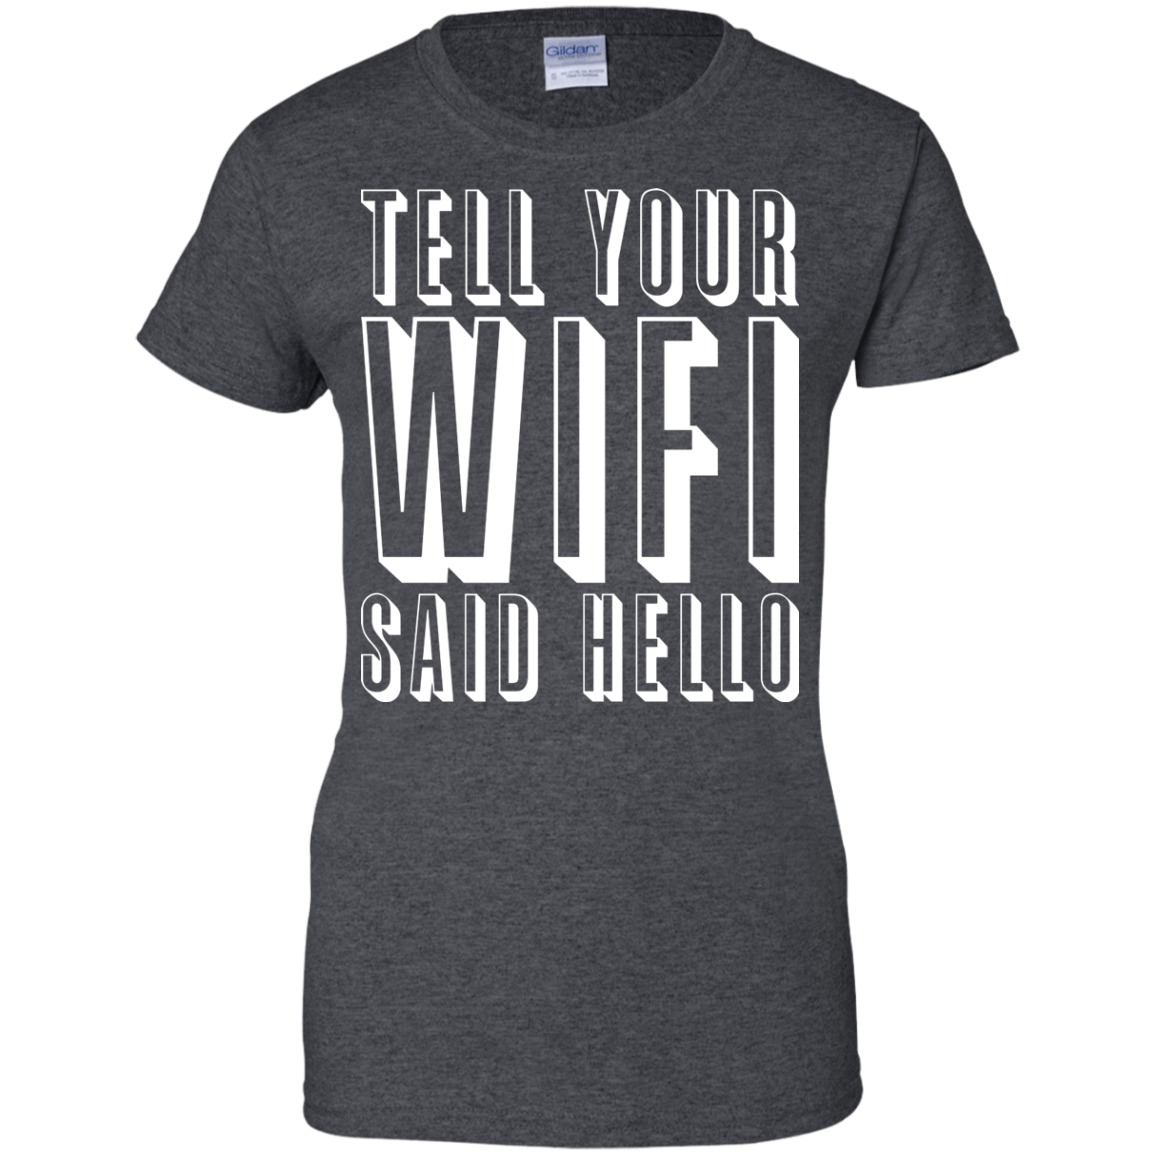 Tell Your Wifi Said Hello